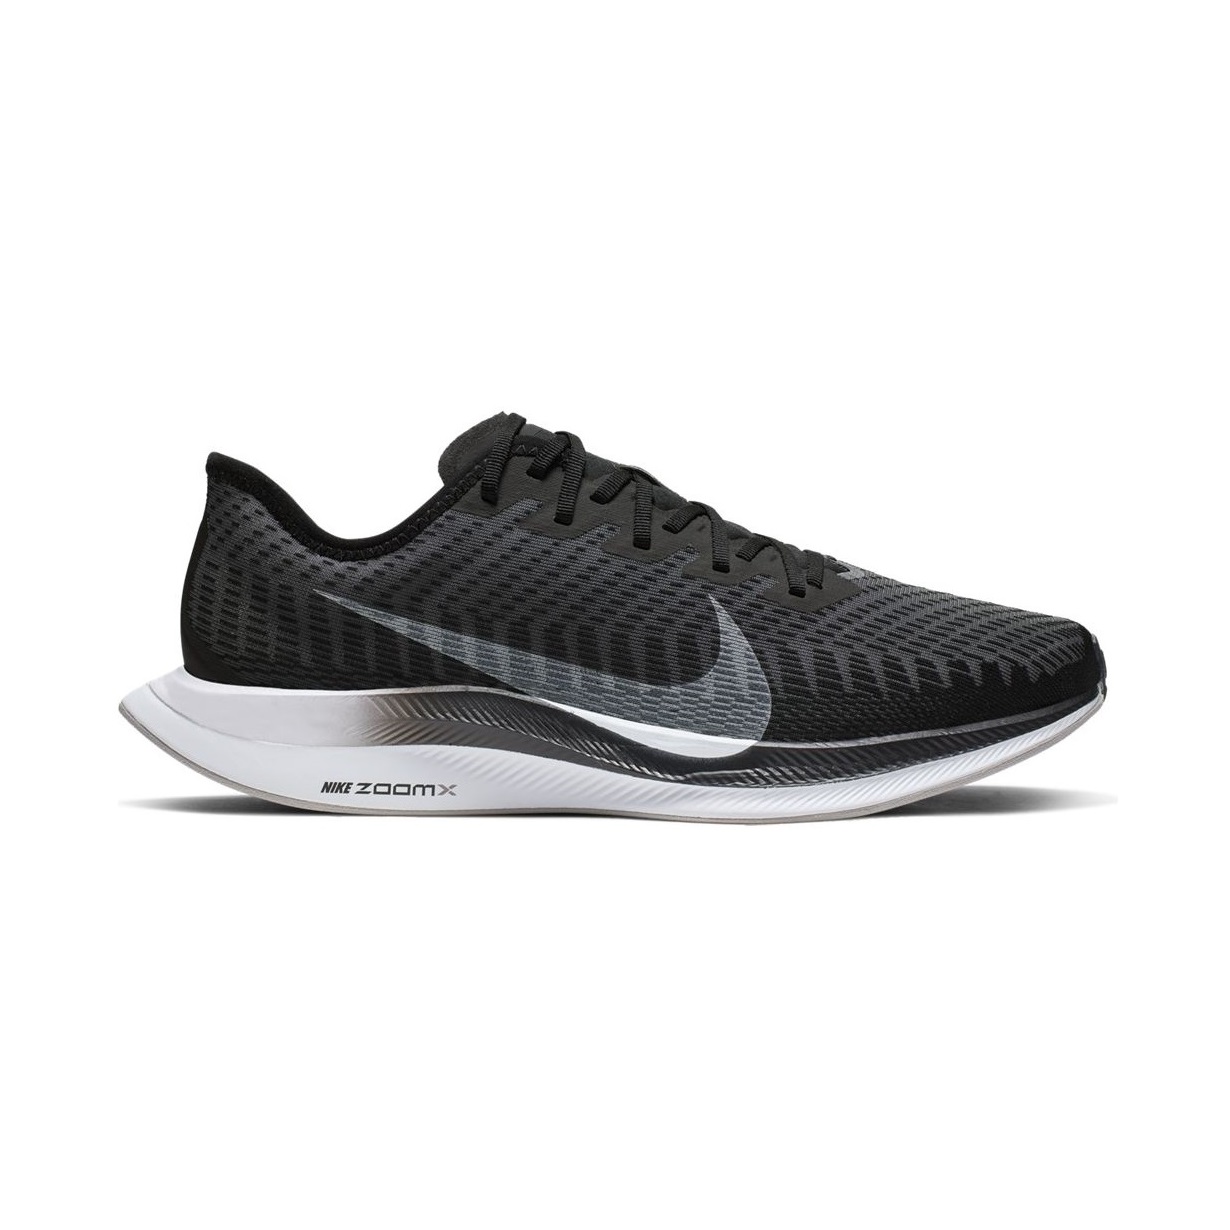 Zapatillas running para hombre - Nike Zoom Turbo - AT2863-001 | Ferrer Sport | Tienda online de deportes